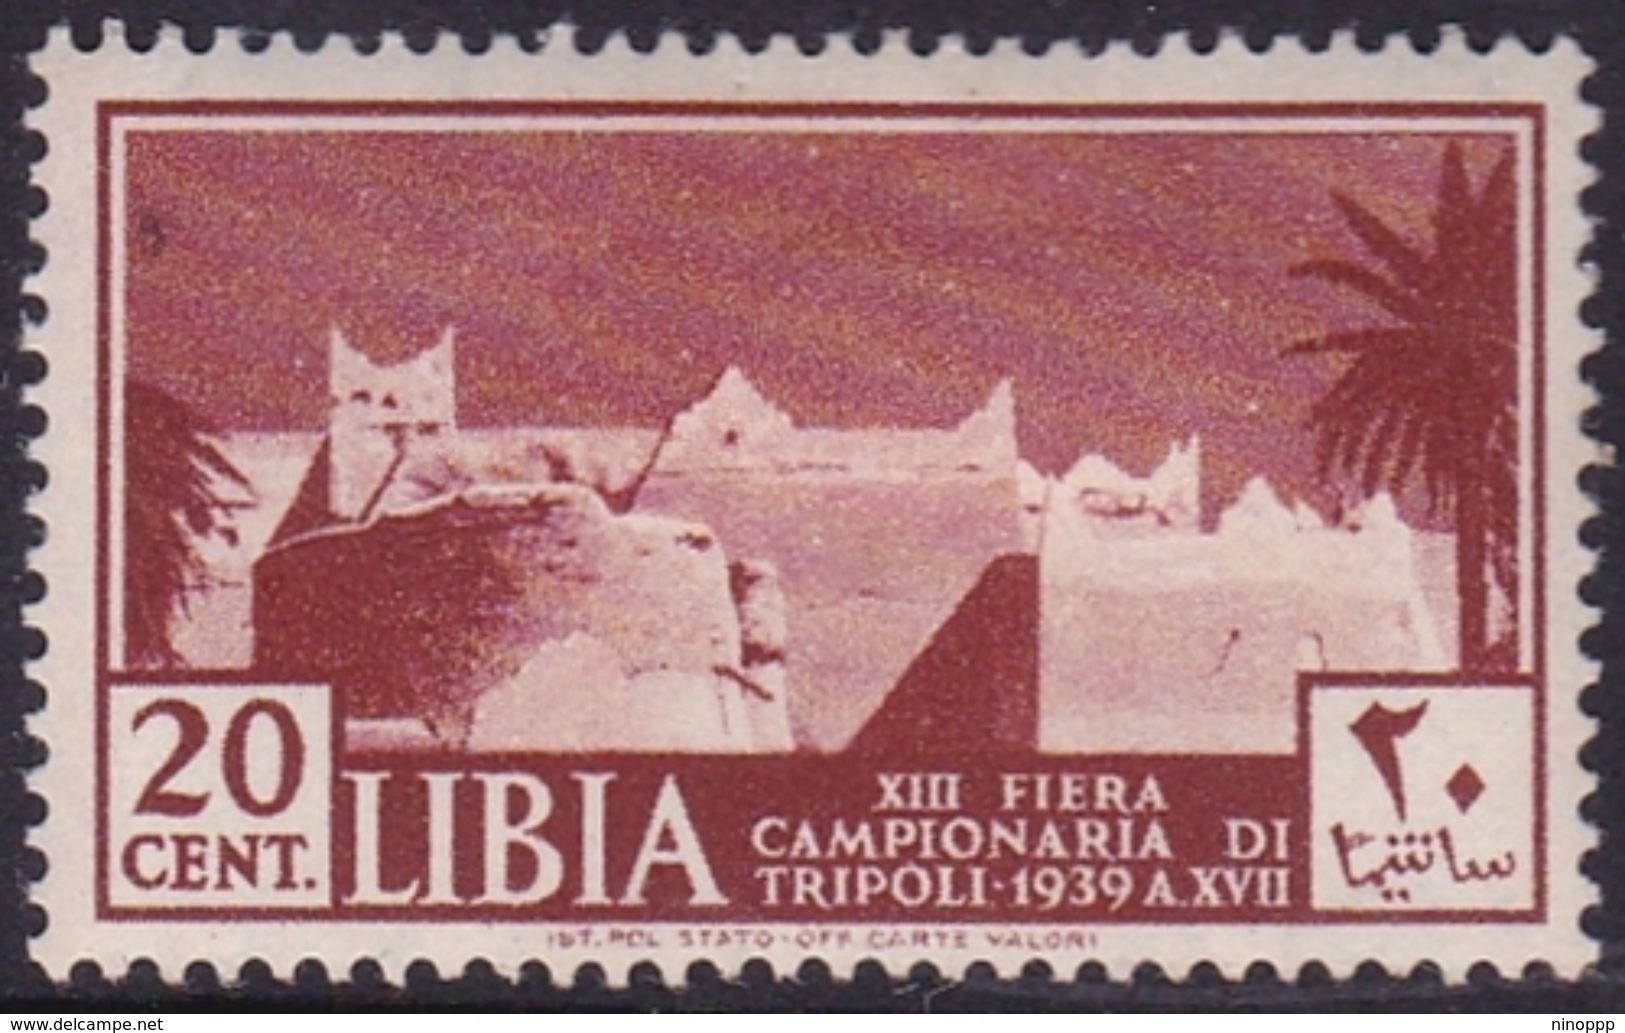 Italy-Colonies And Territories-Libya S 159 1938 13th Tripoli Fair,20c Red Brown,mint Hinged - Libya